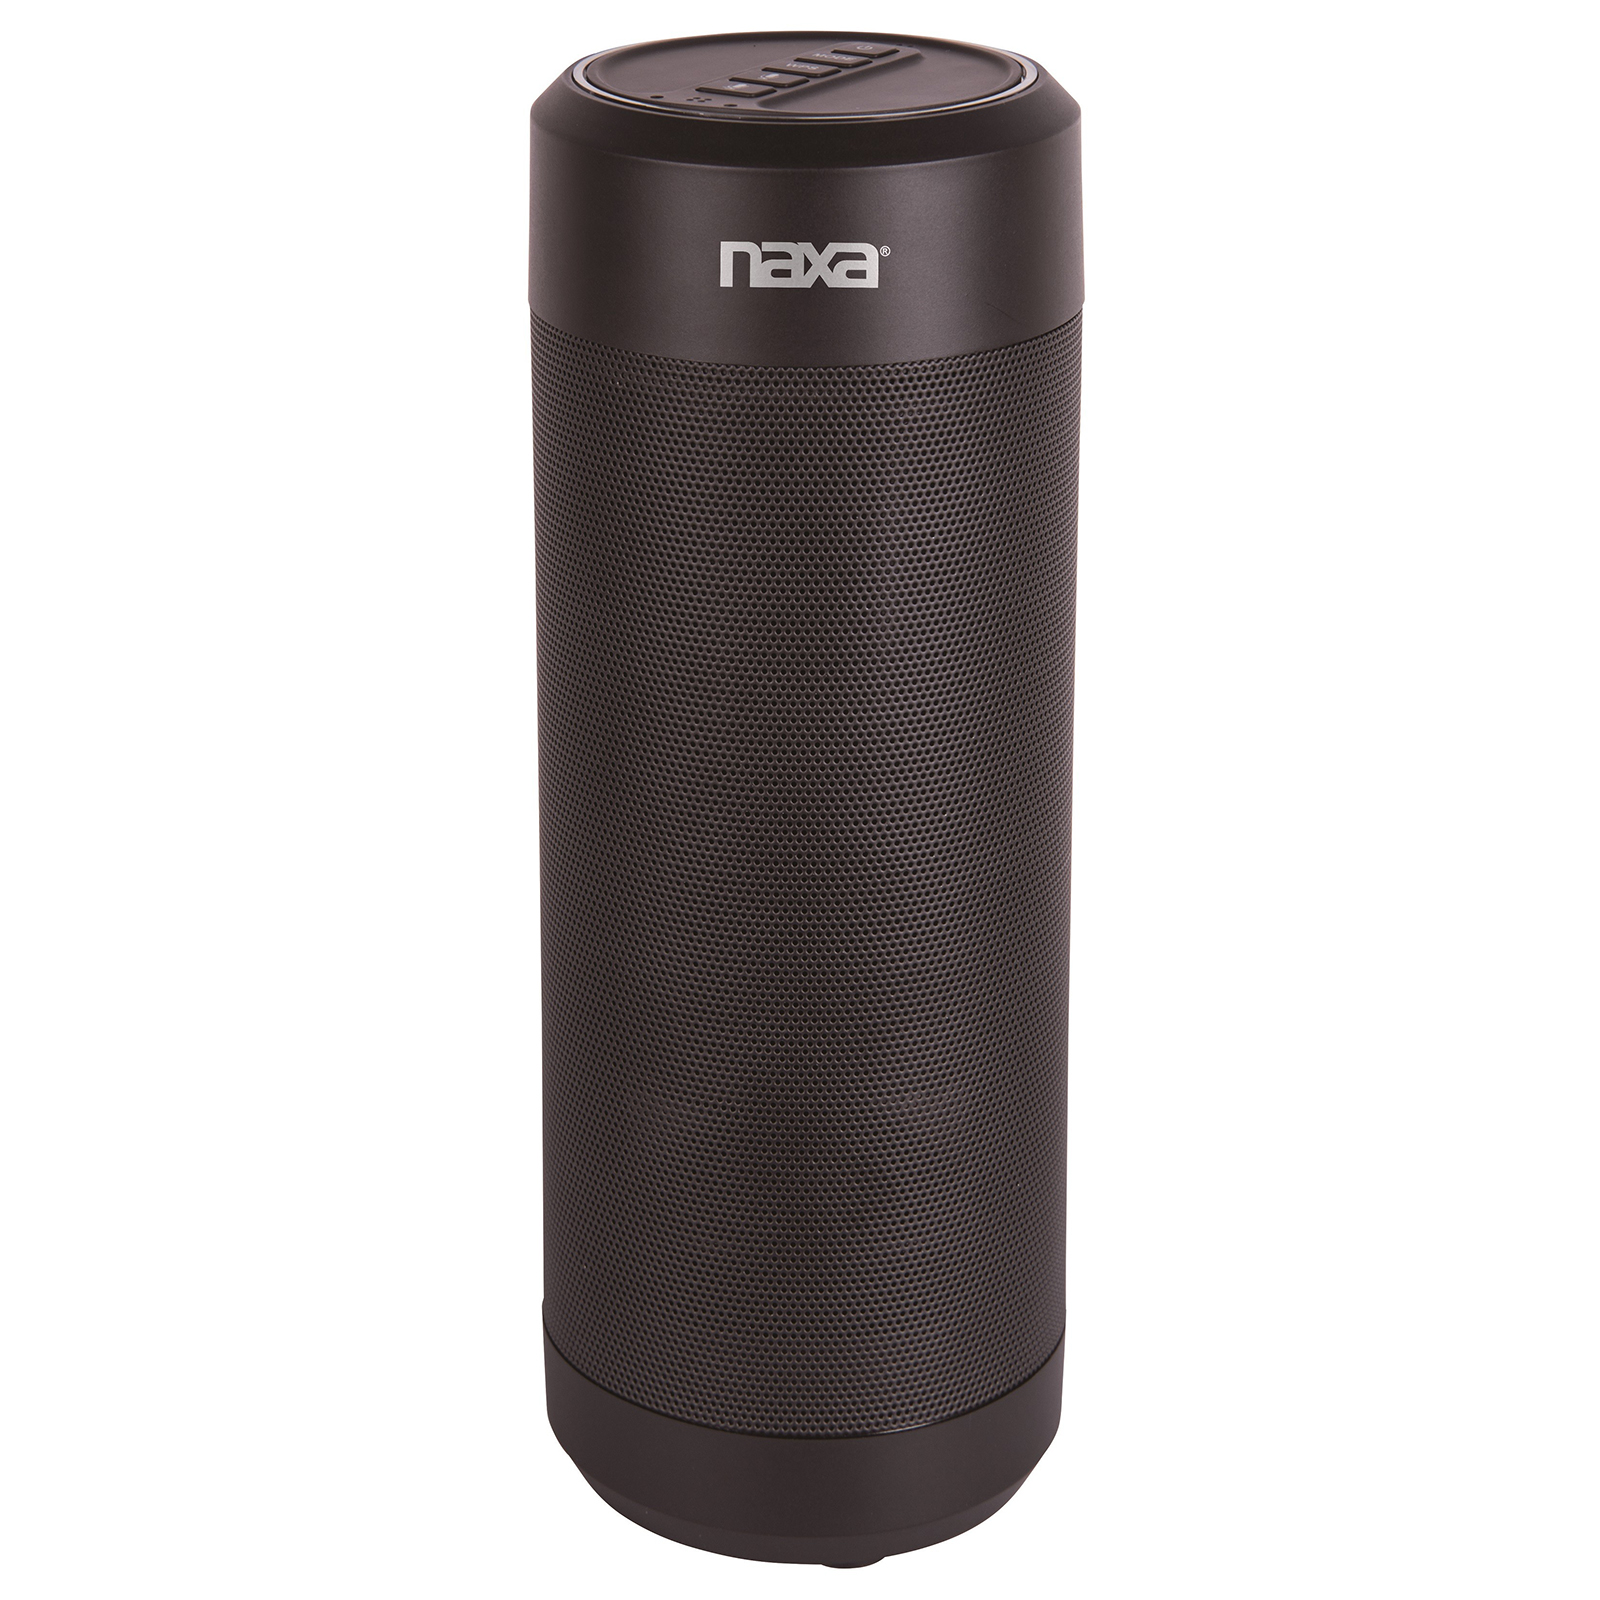 Naxa 970102714M Wireless Speaker with Amazon Alexa Voice Control